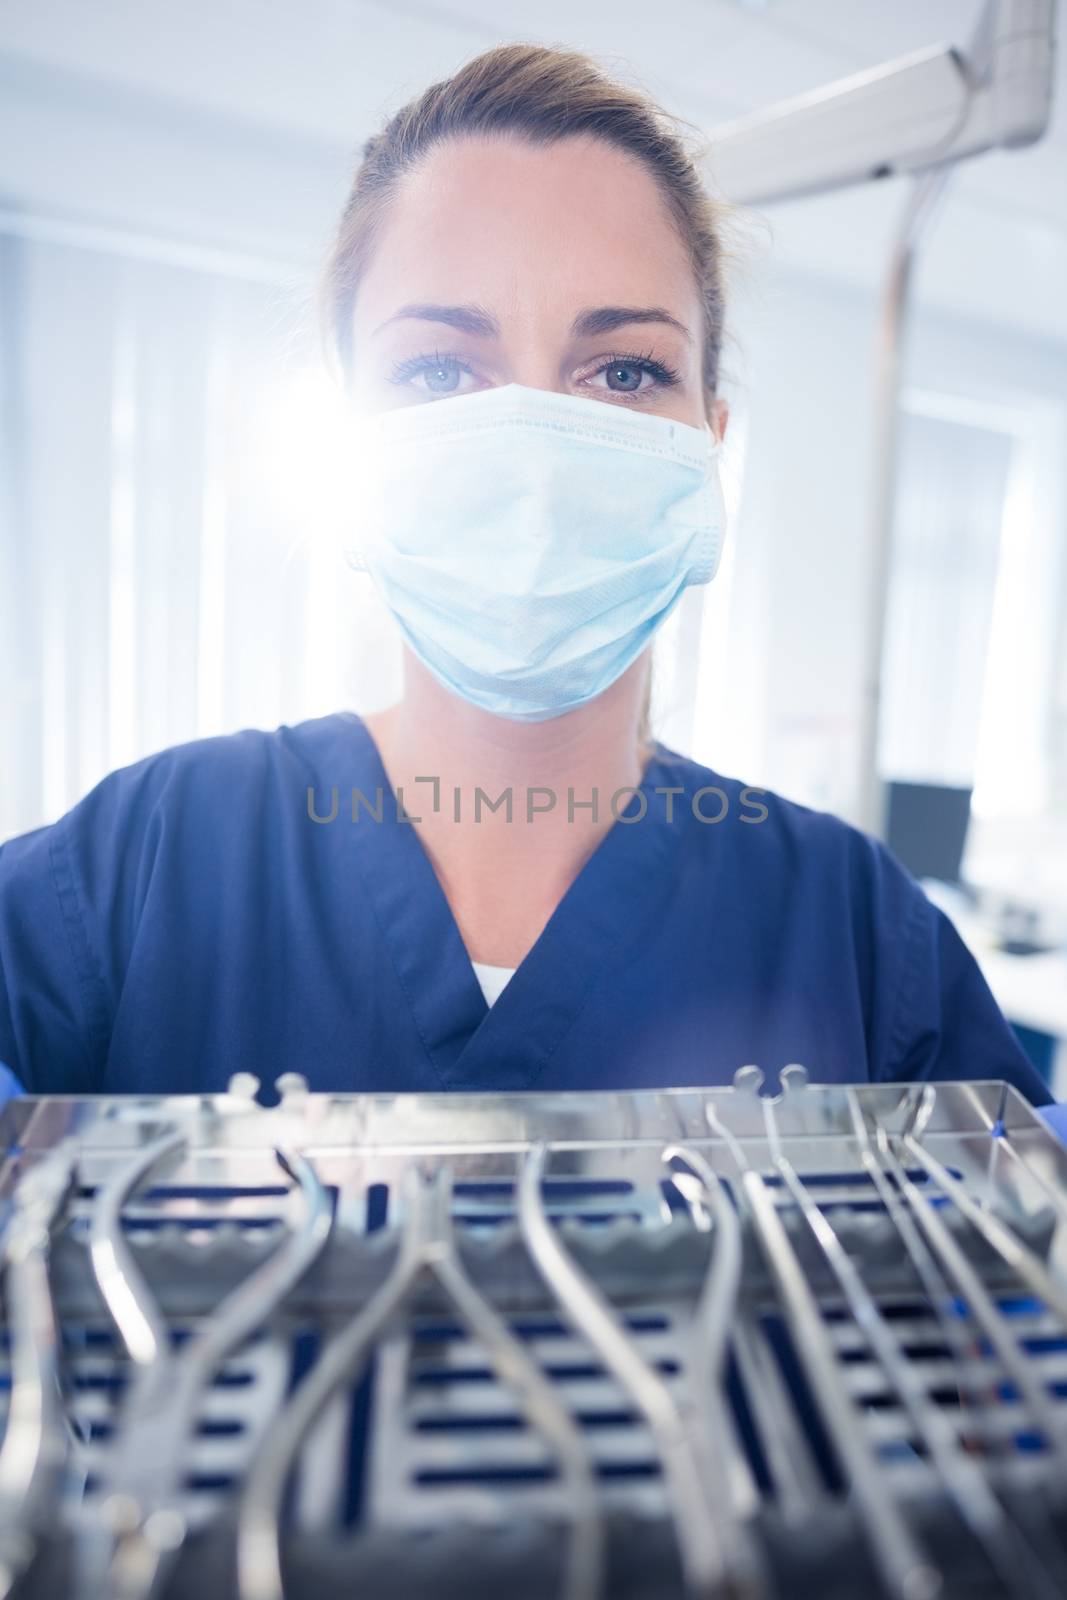 Dentist in blue scrubs showing tray of tools by Wavebreakmedia